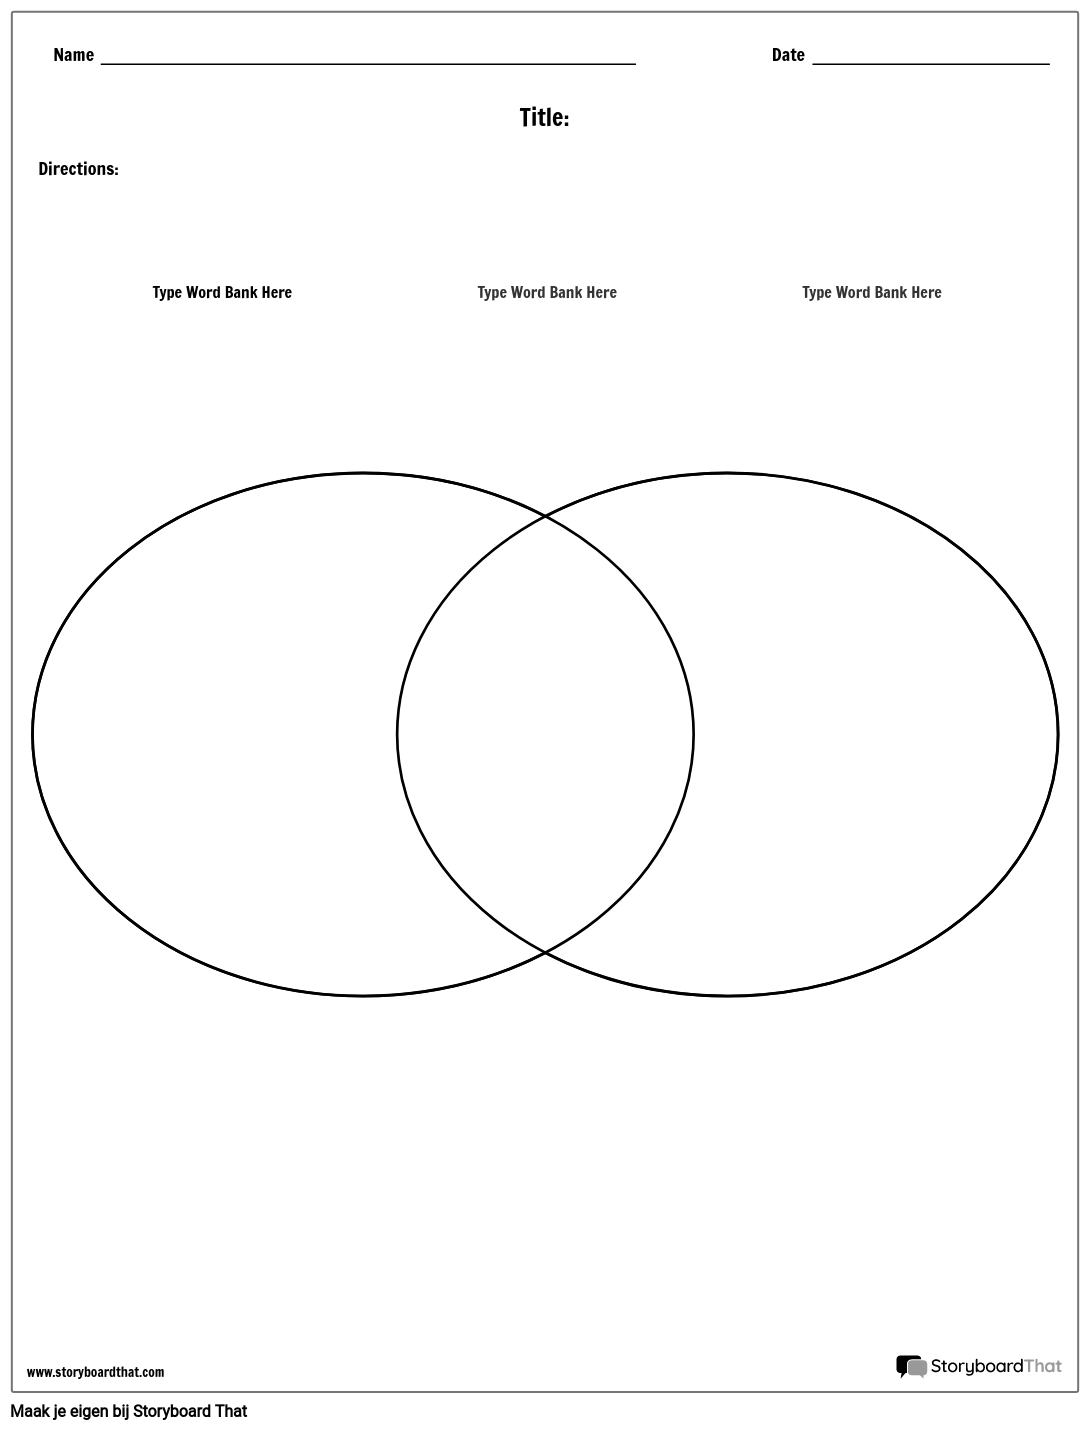 Venn-diagram - 2